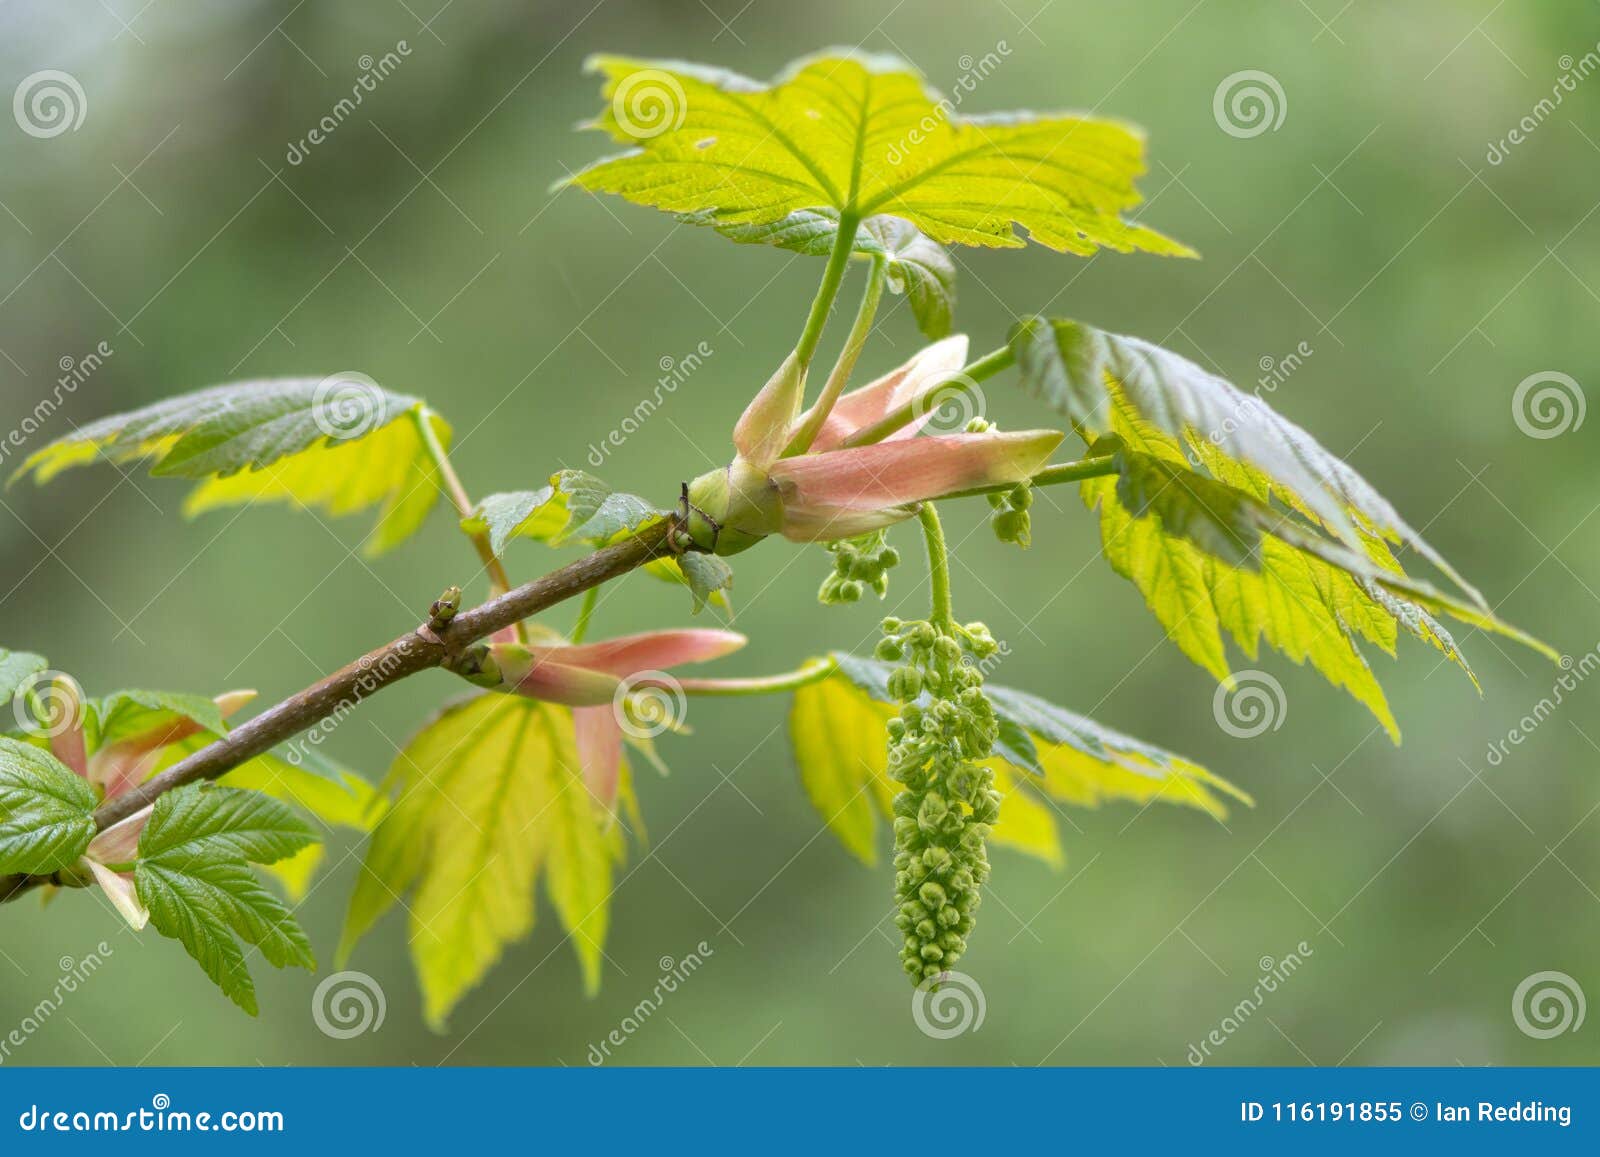 sycamore acer pseudoplatanus tree in flower